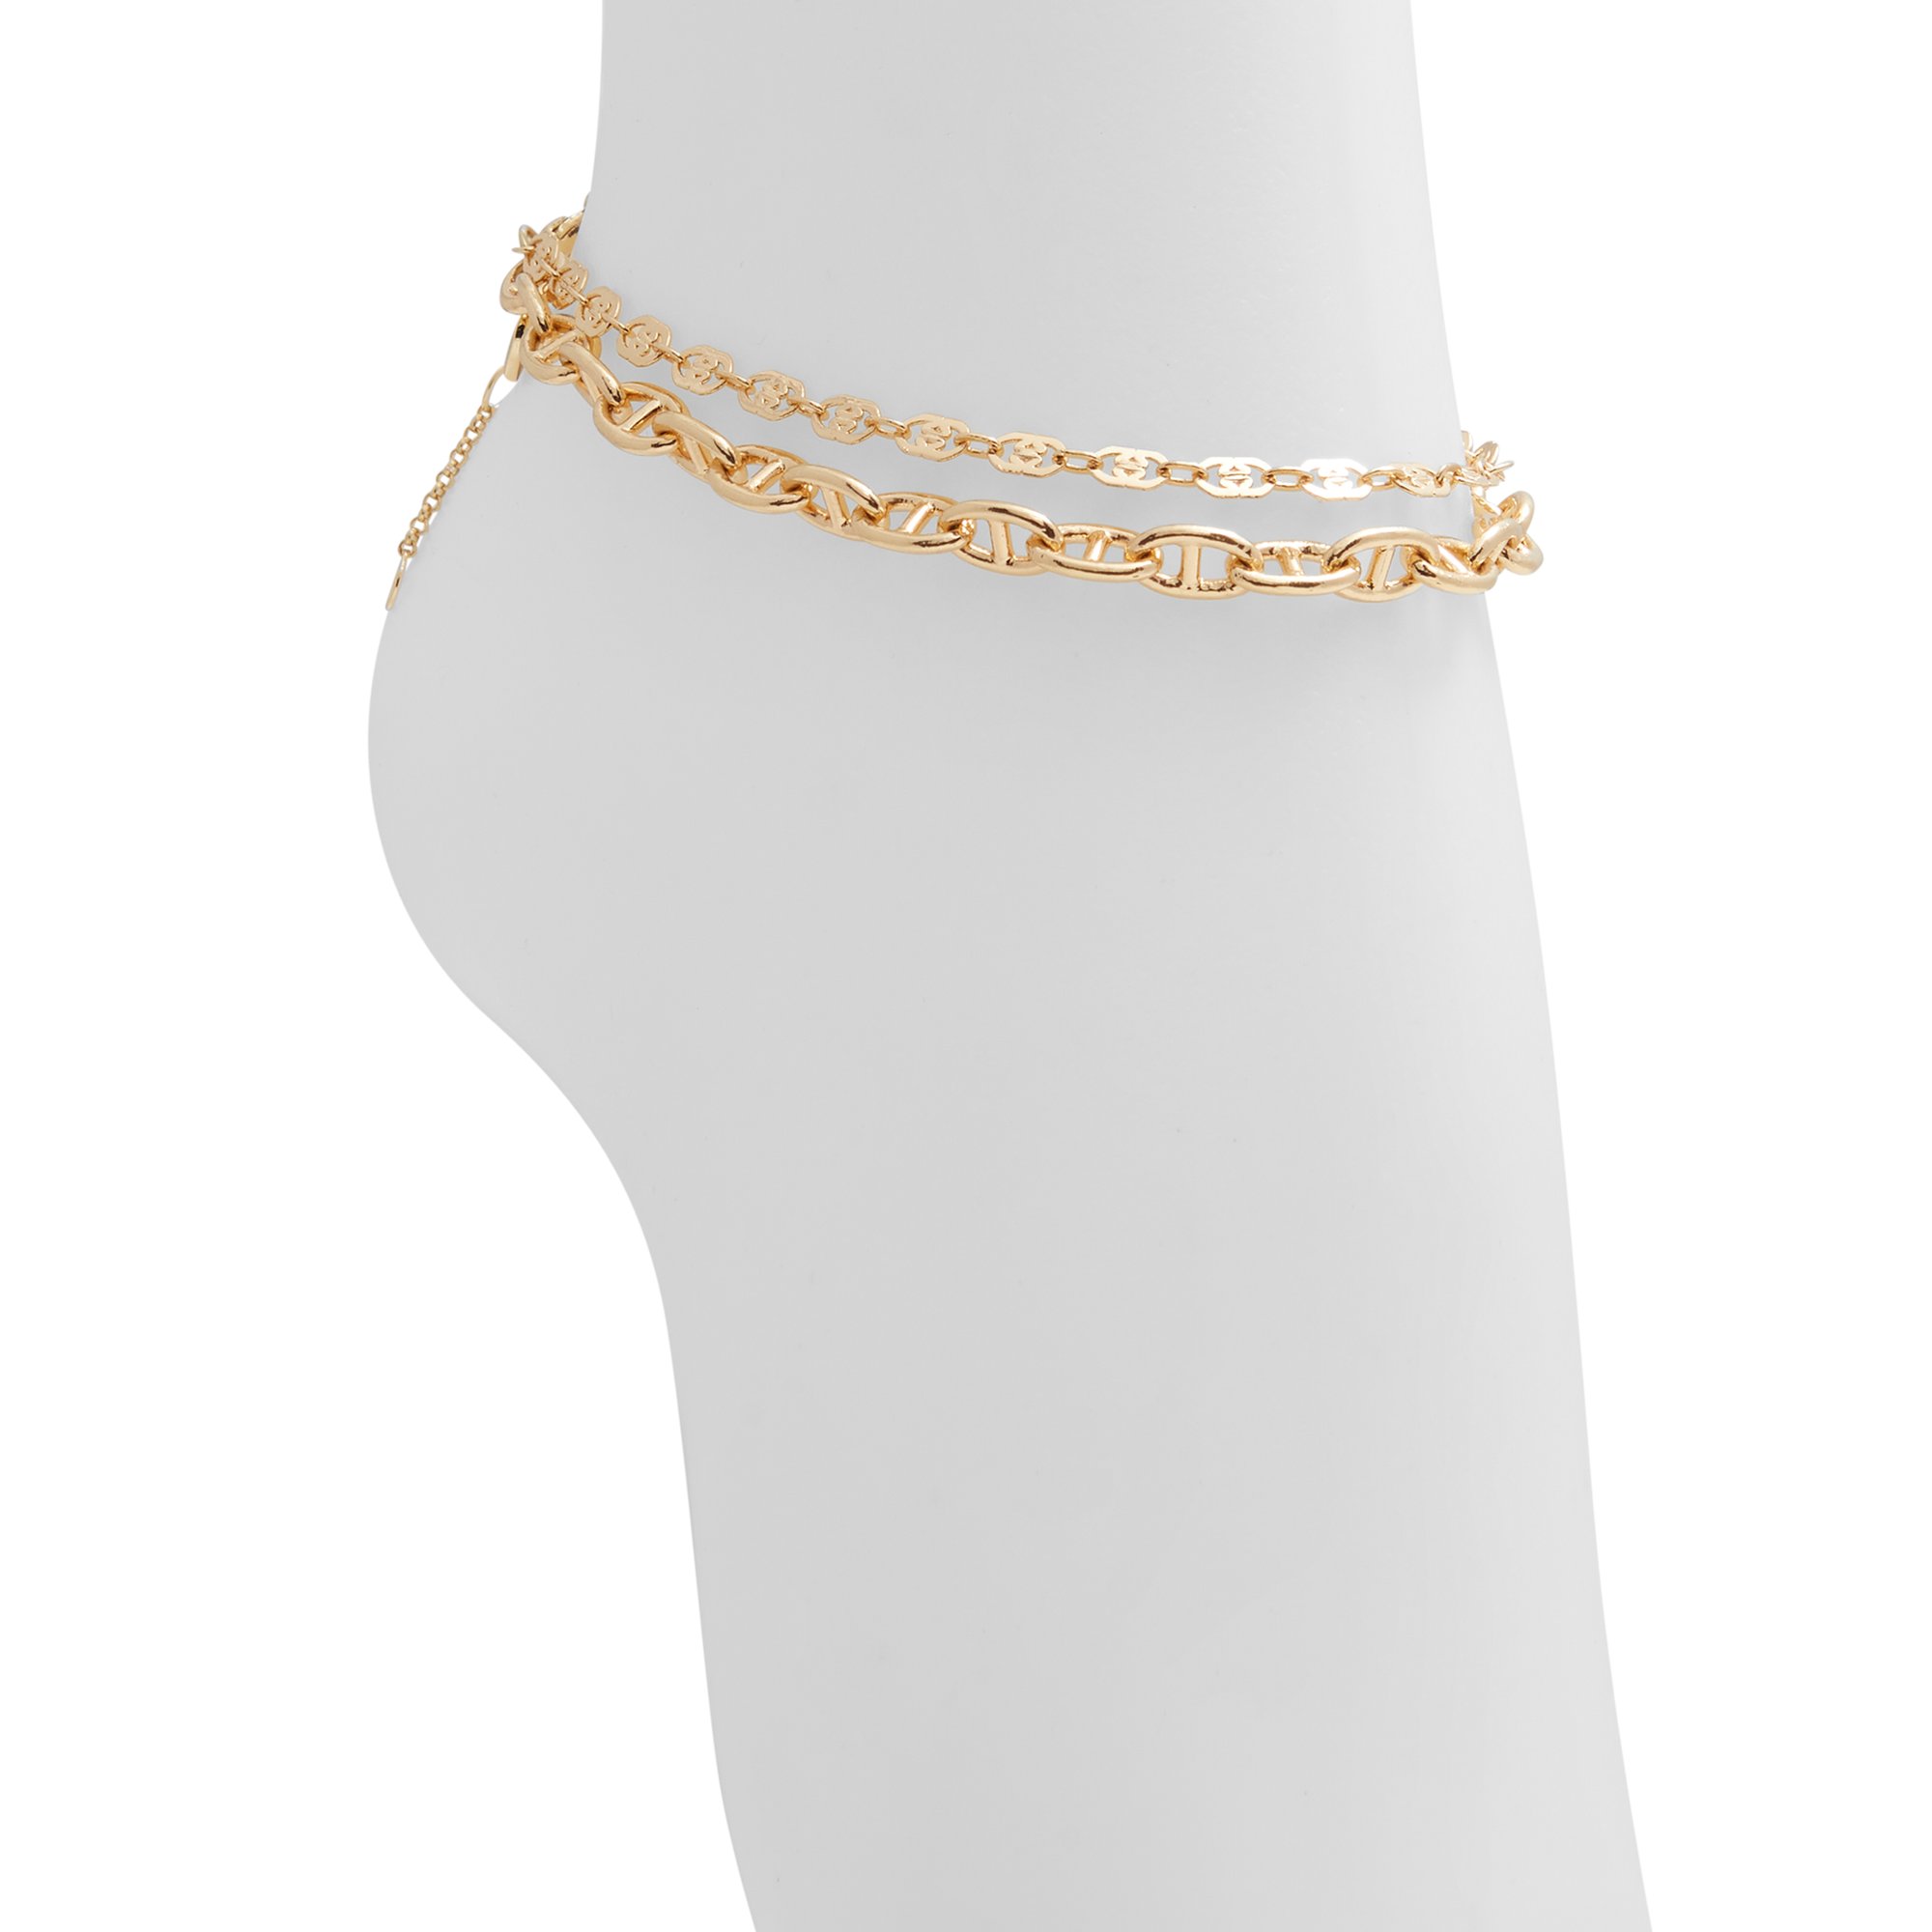 Image of ALDO Coolbiniaa - Women's Anklet Jewelry - Gold